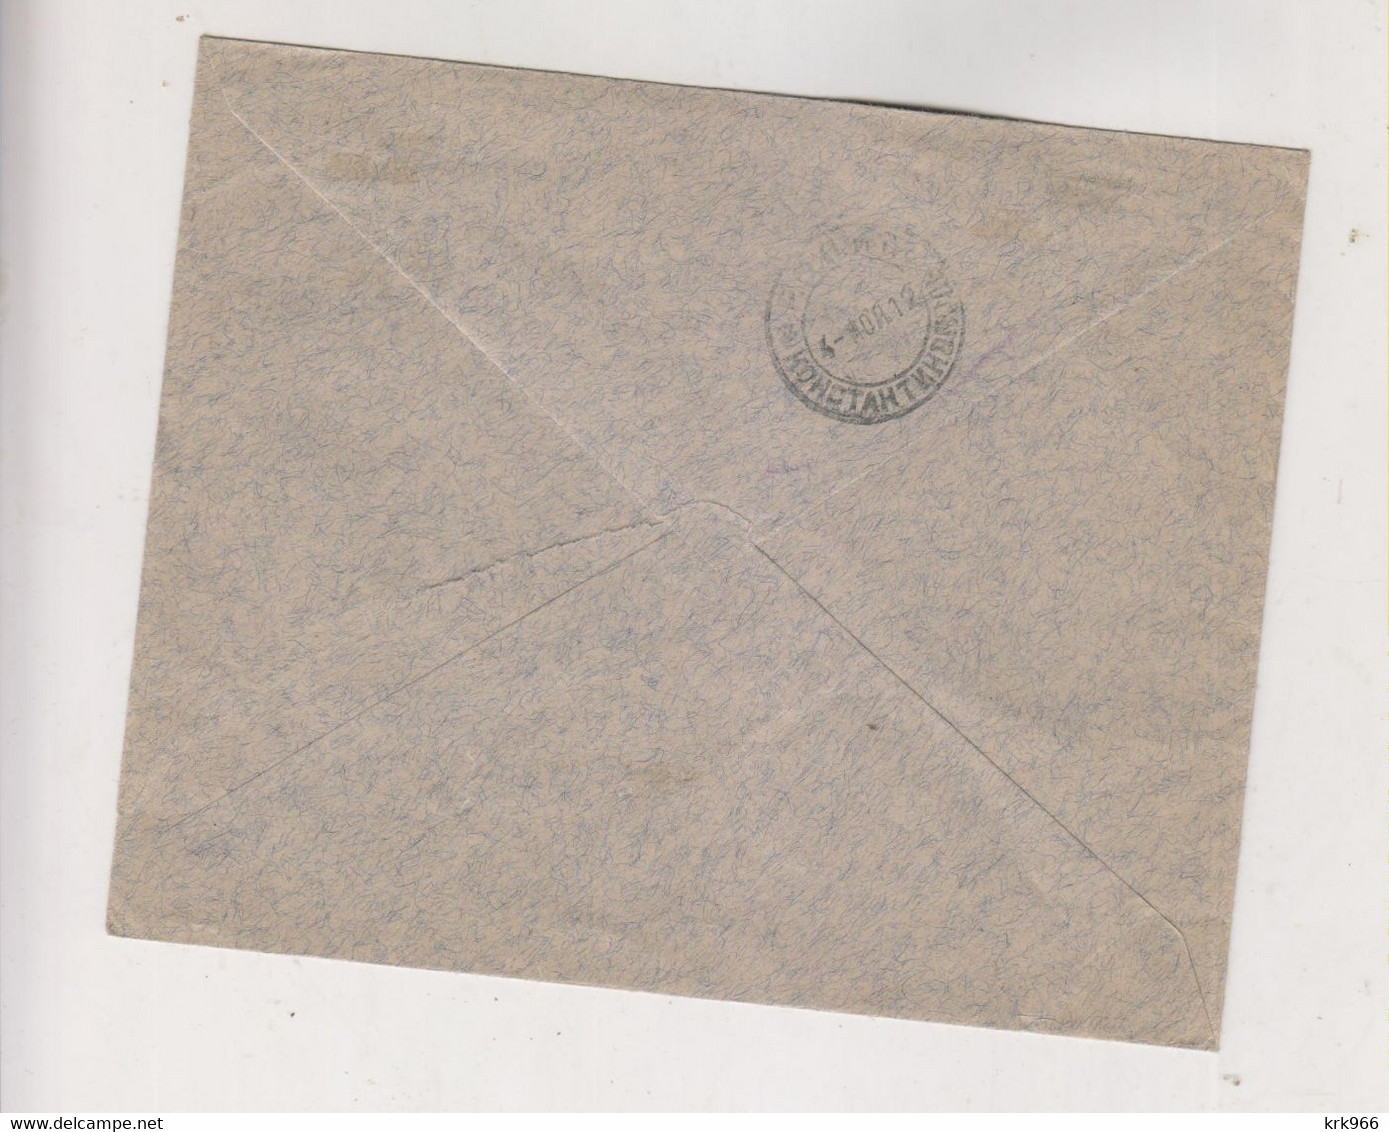 GREECE 1912 RUSSIA Post Office  METELIN Mytilene Nice Cover To Trieste Italy Austria - Briefe U. Dokumente